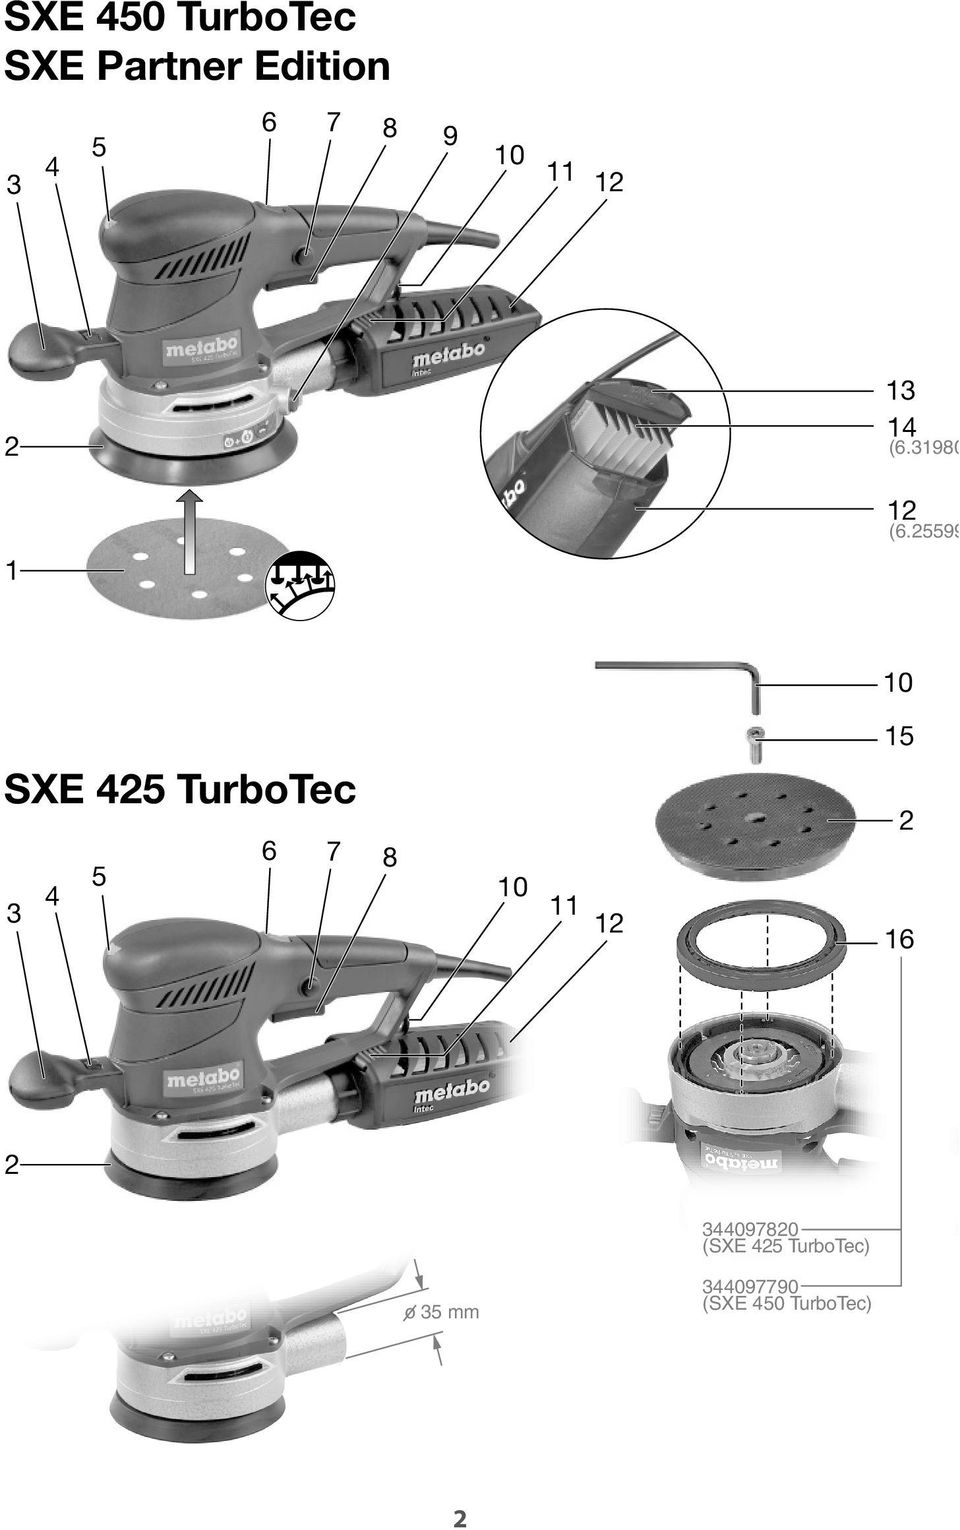 25599 10 15 SXE 425 TurboTec 3 4 5 6 7 8 10 11 12 2